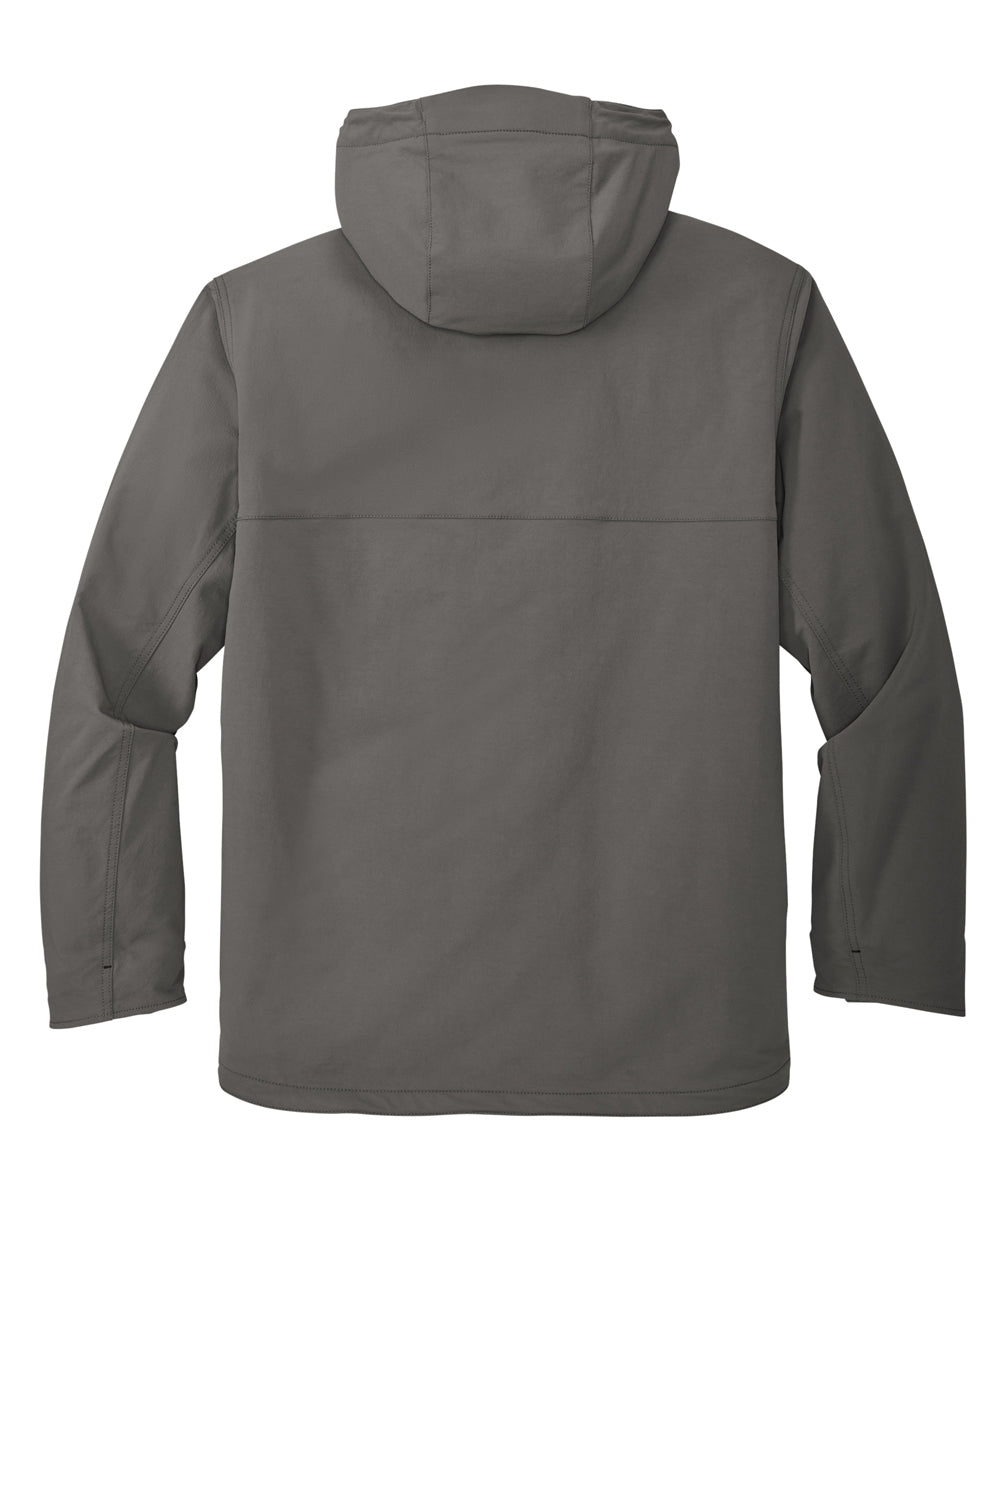 Carhartt CT105533 Mens Super Dux Wind & Water Resistant Full Zip Hooded Jacket Gravel Grey Flat Back